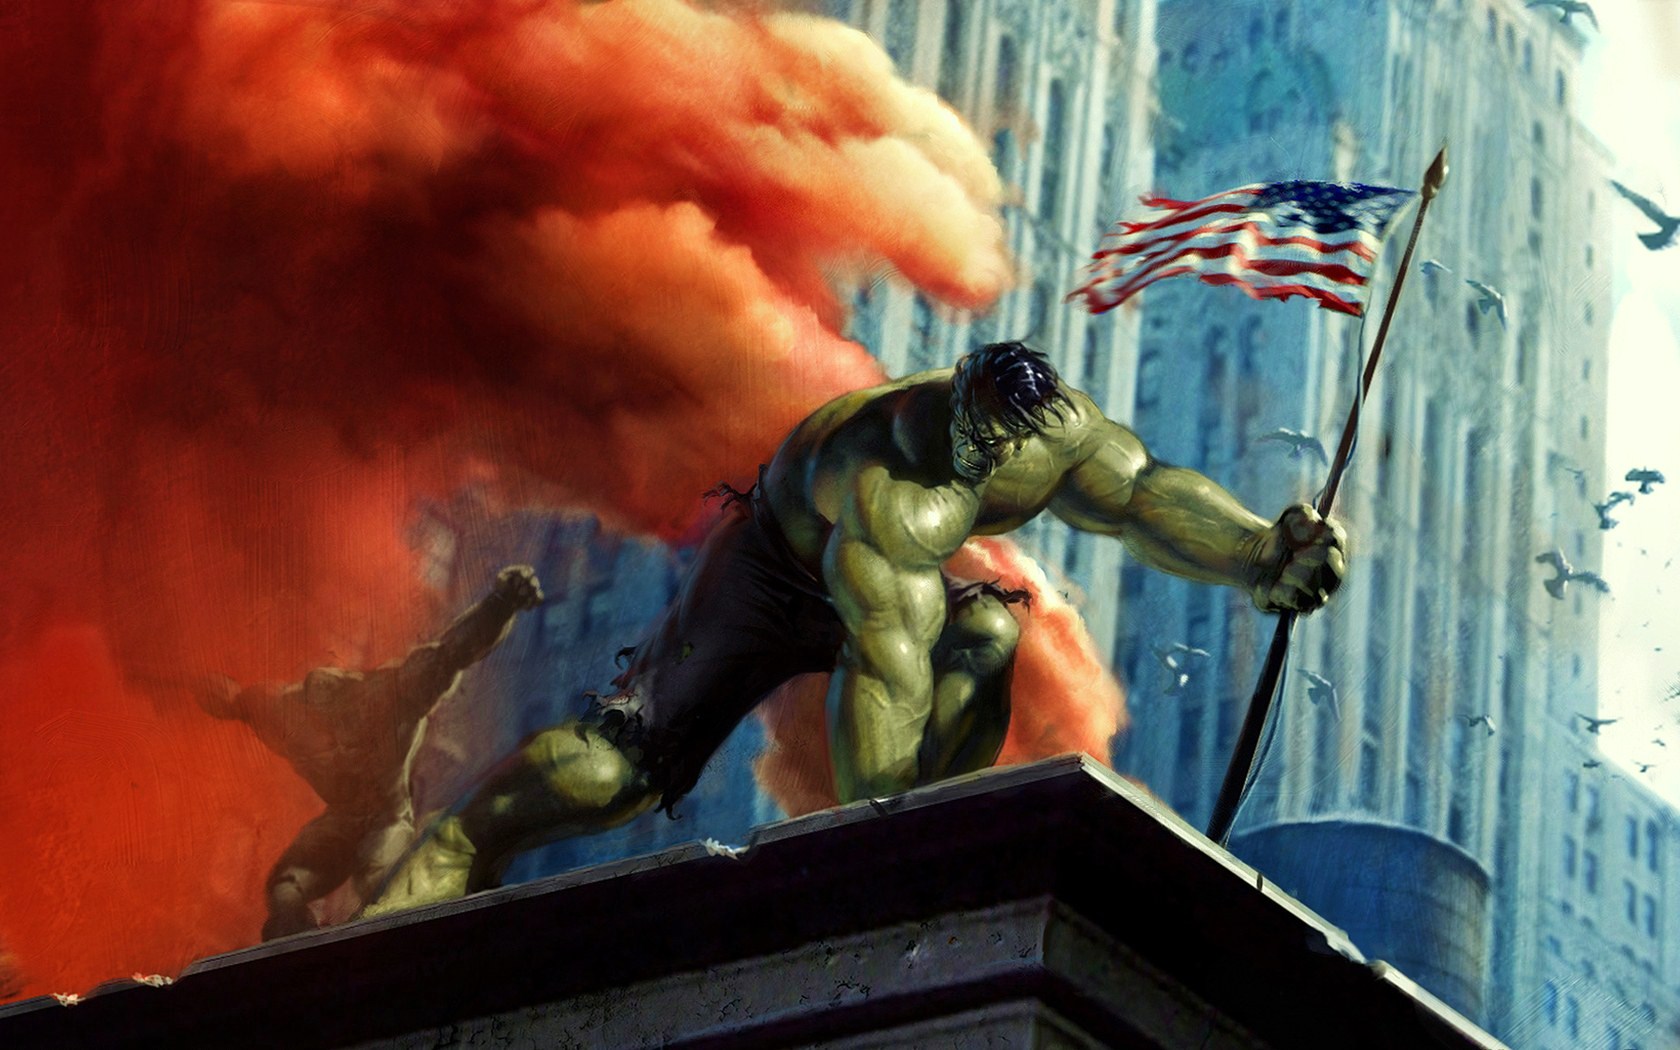 The Hulk Wallpaper - The Incredible Hulk Wallpaper (31051346) - Fanpop